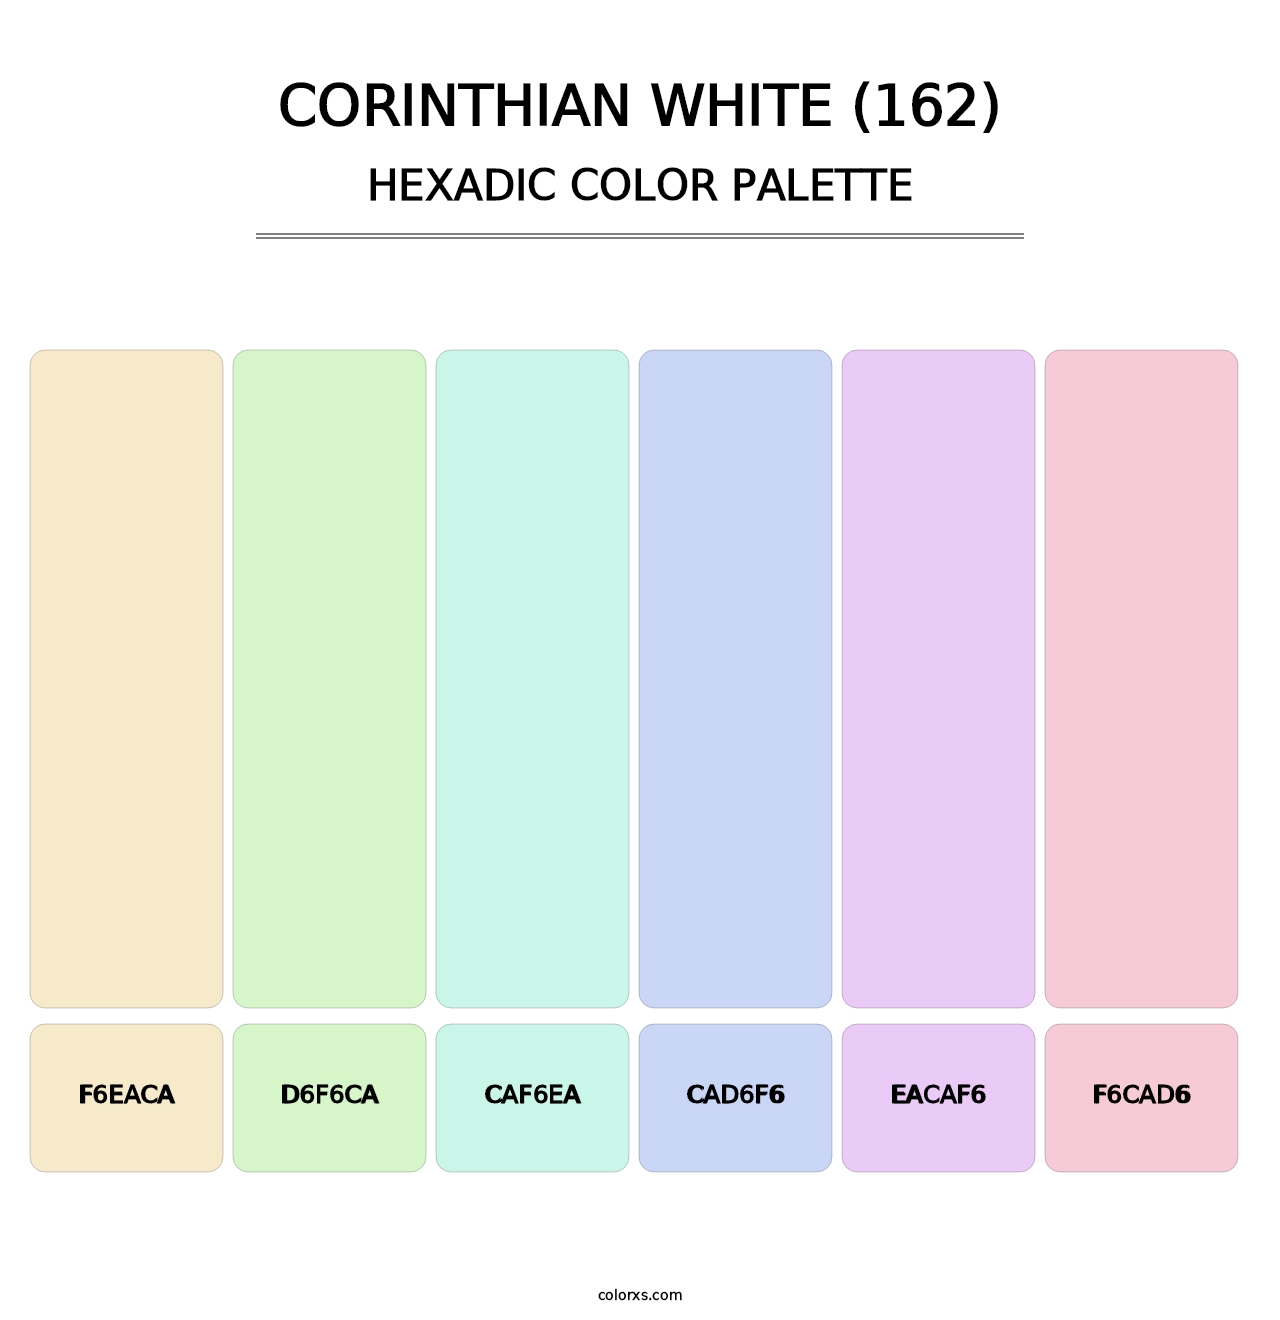 Corinthian White (162) - Hexadic Color Palette